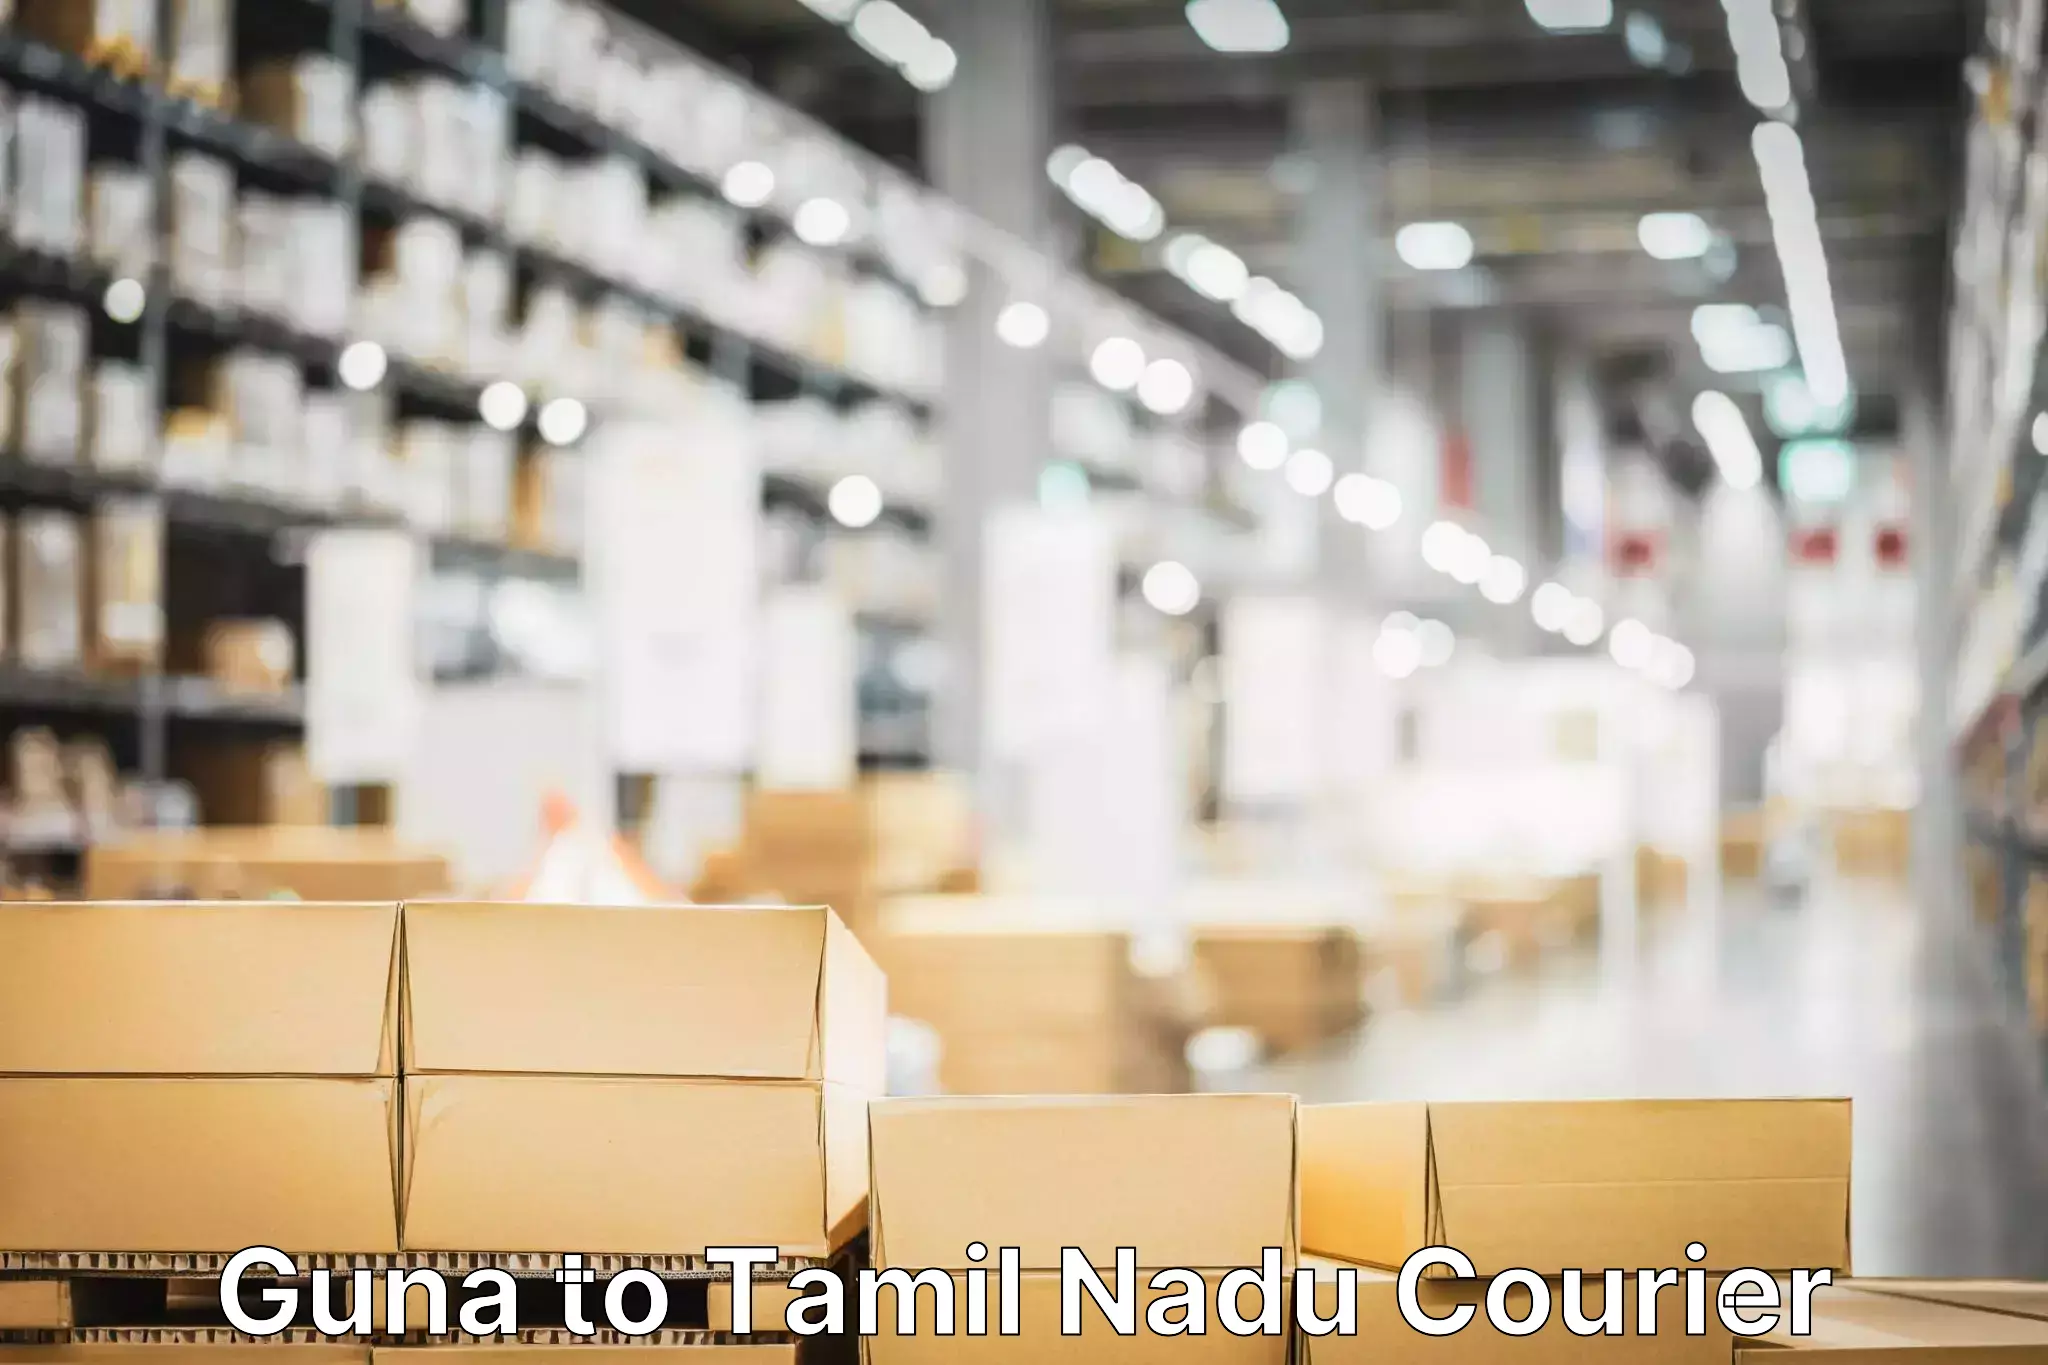 Courier service innovation in Guna to Tamil Nadu